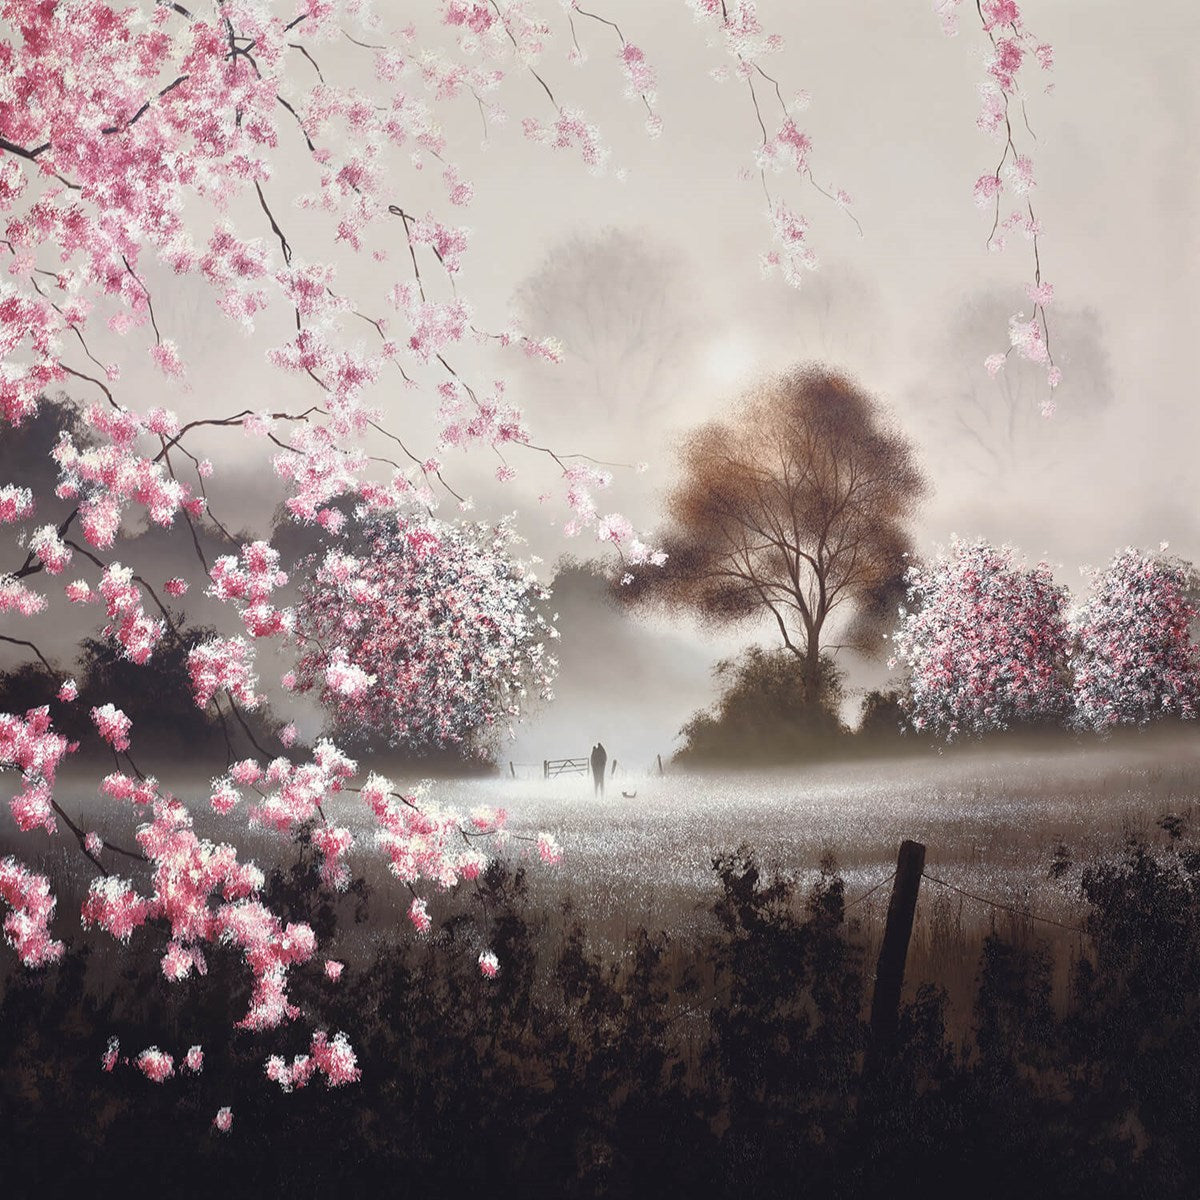 Through Blossom Fields I limited edition framed print by John Waterhouse